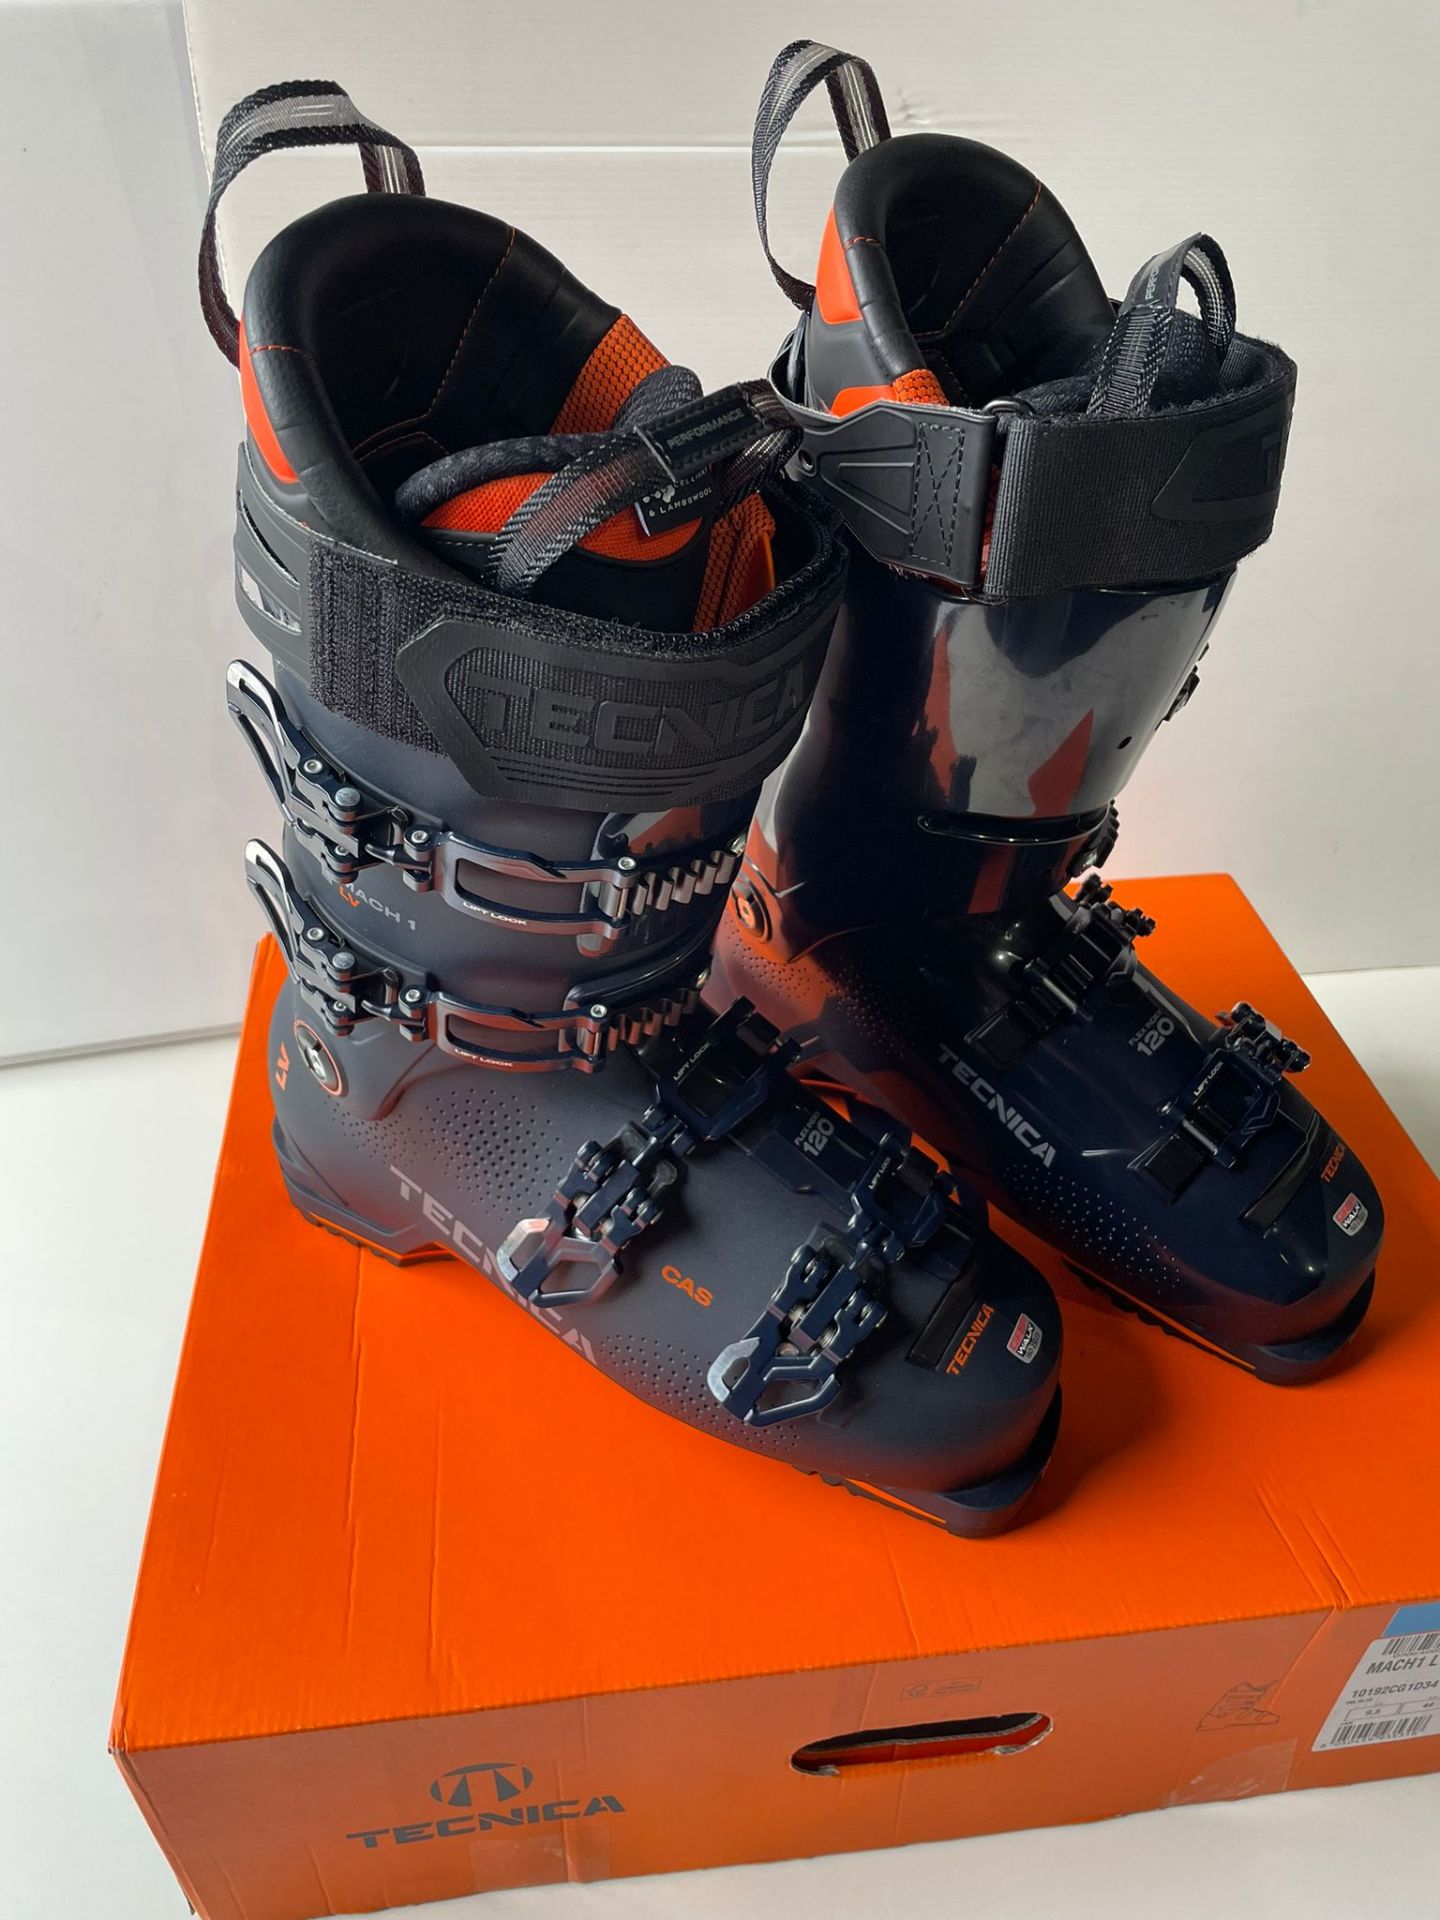 Tecnica ski boot, UK size 9.5